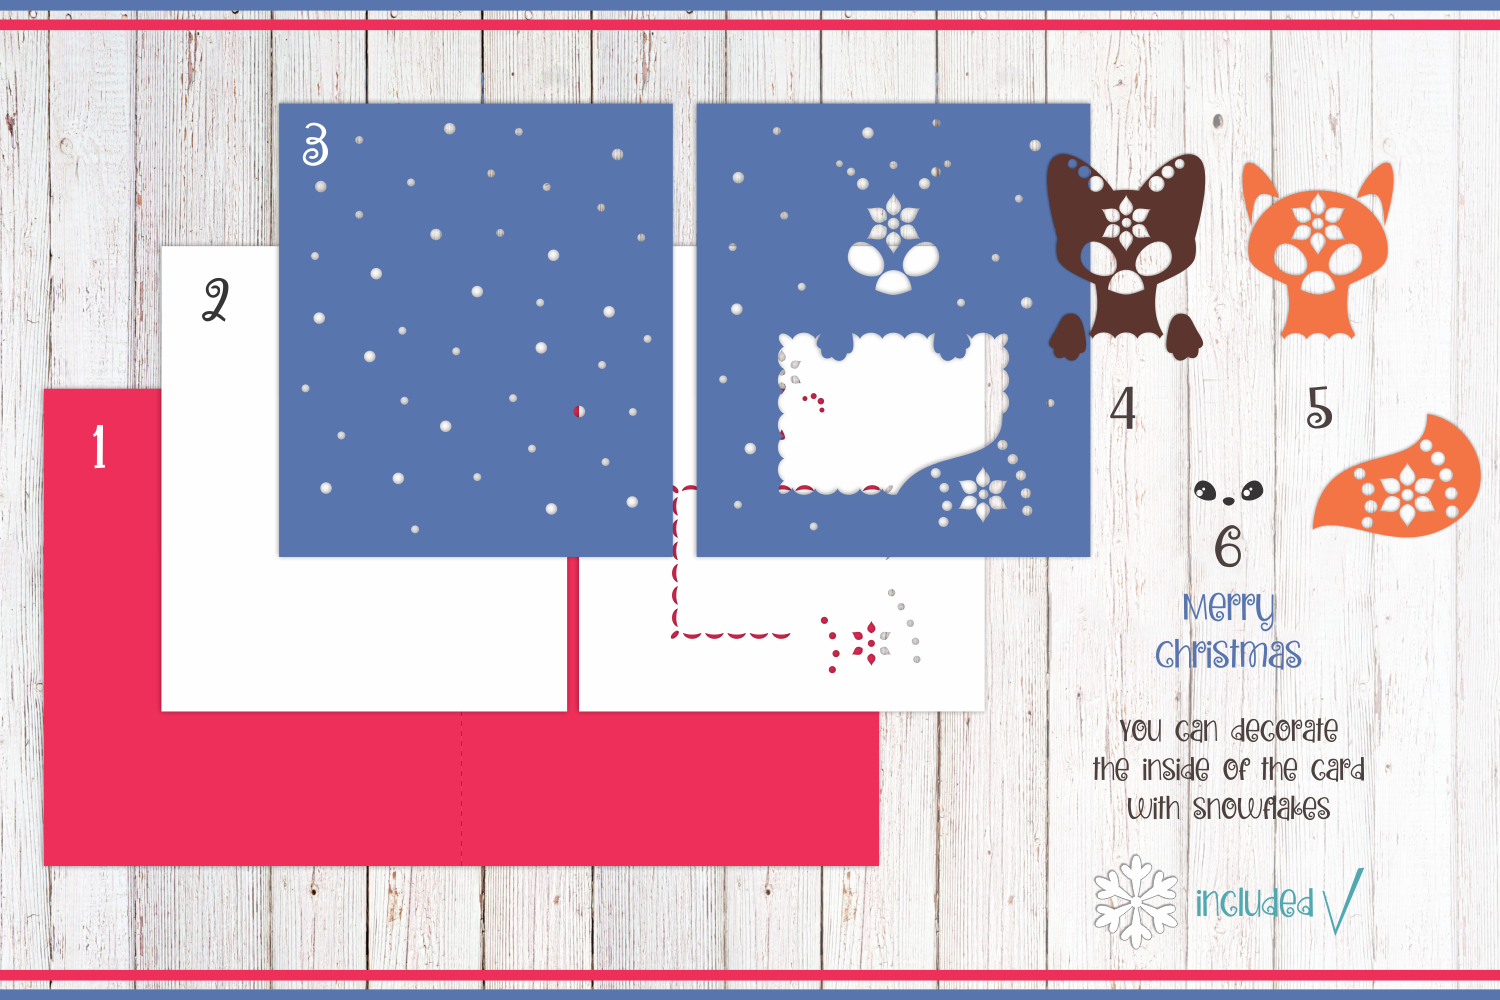 3d Layered Christmas Greeting Card With Fox By Olga Belova Thehungryjpeg Com